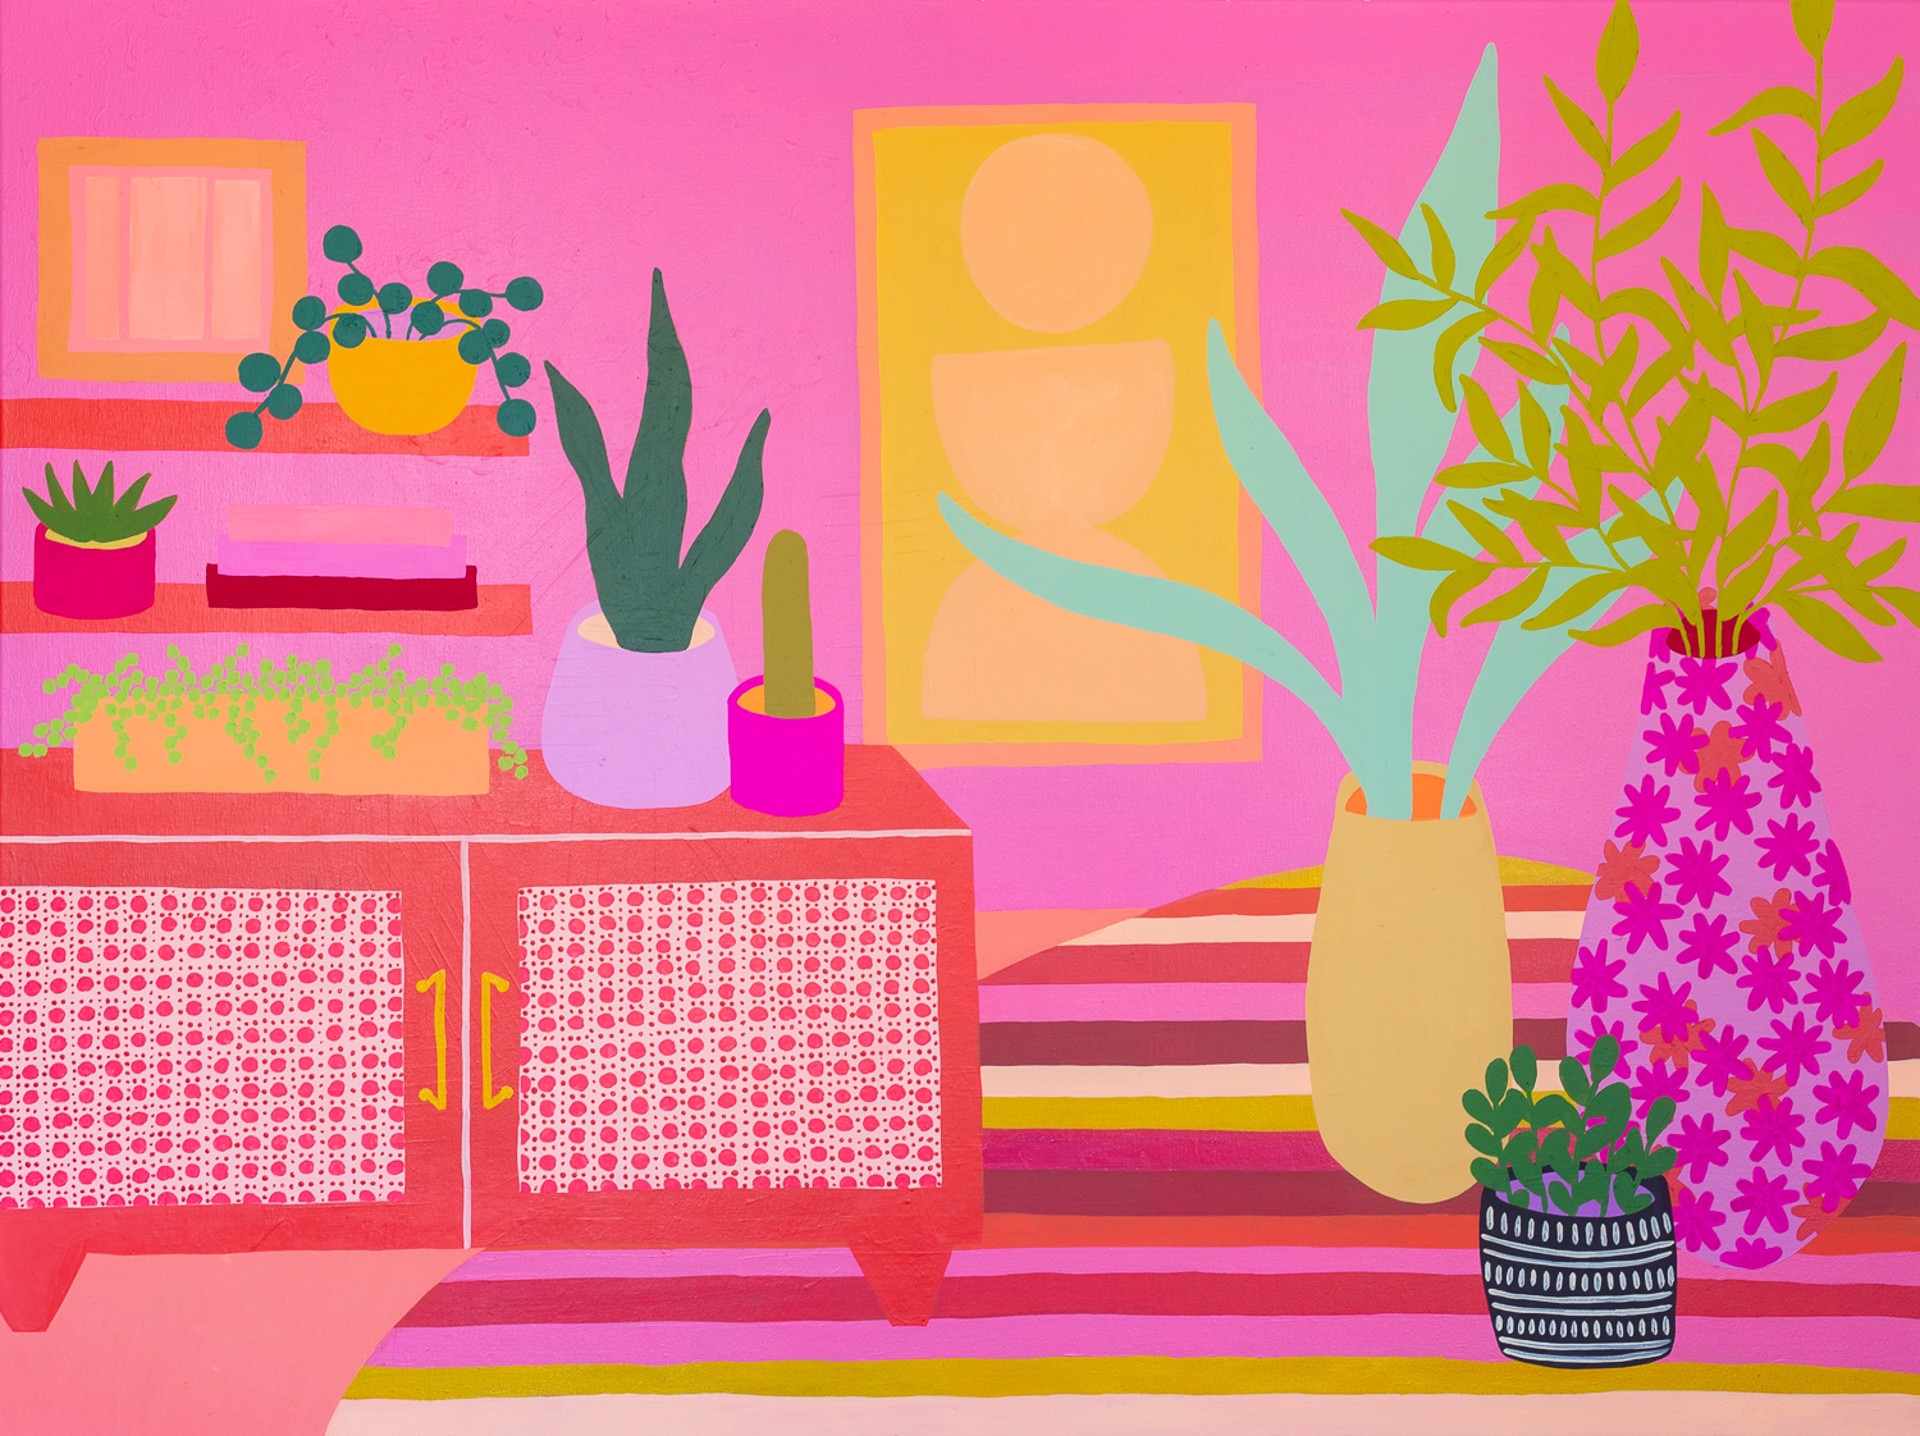 Pink Walls & Plants by Bailey Schmidt